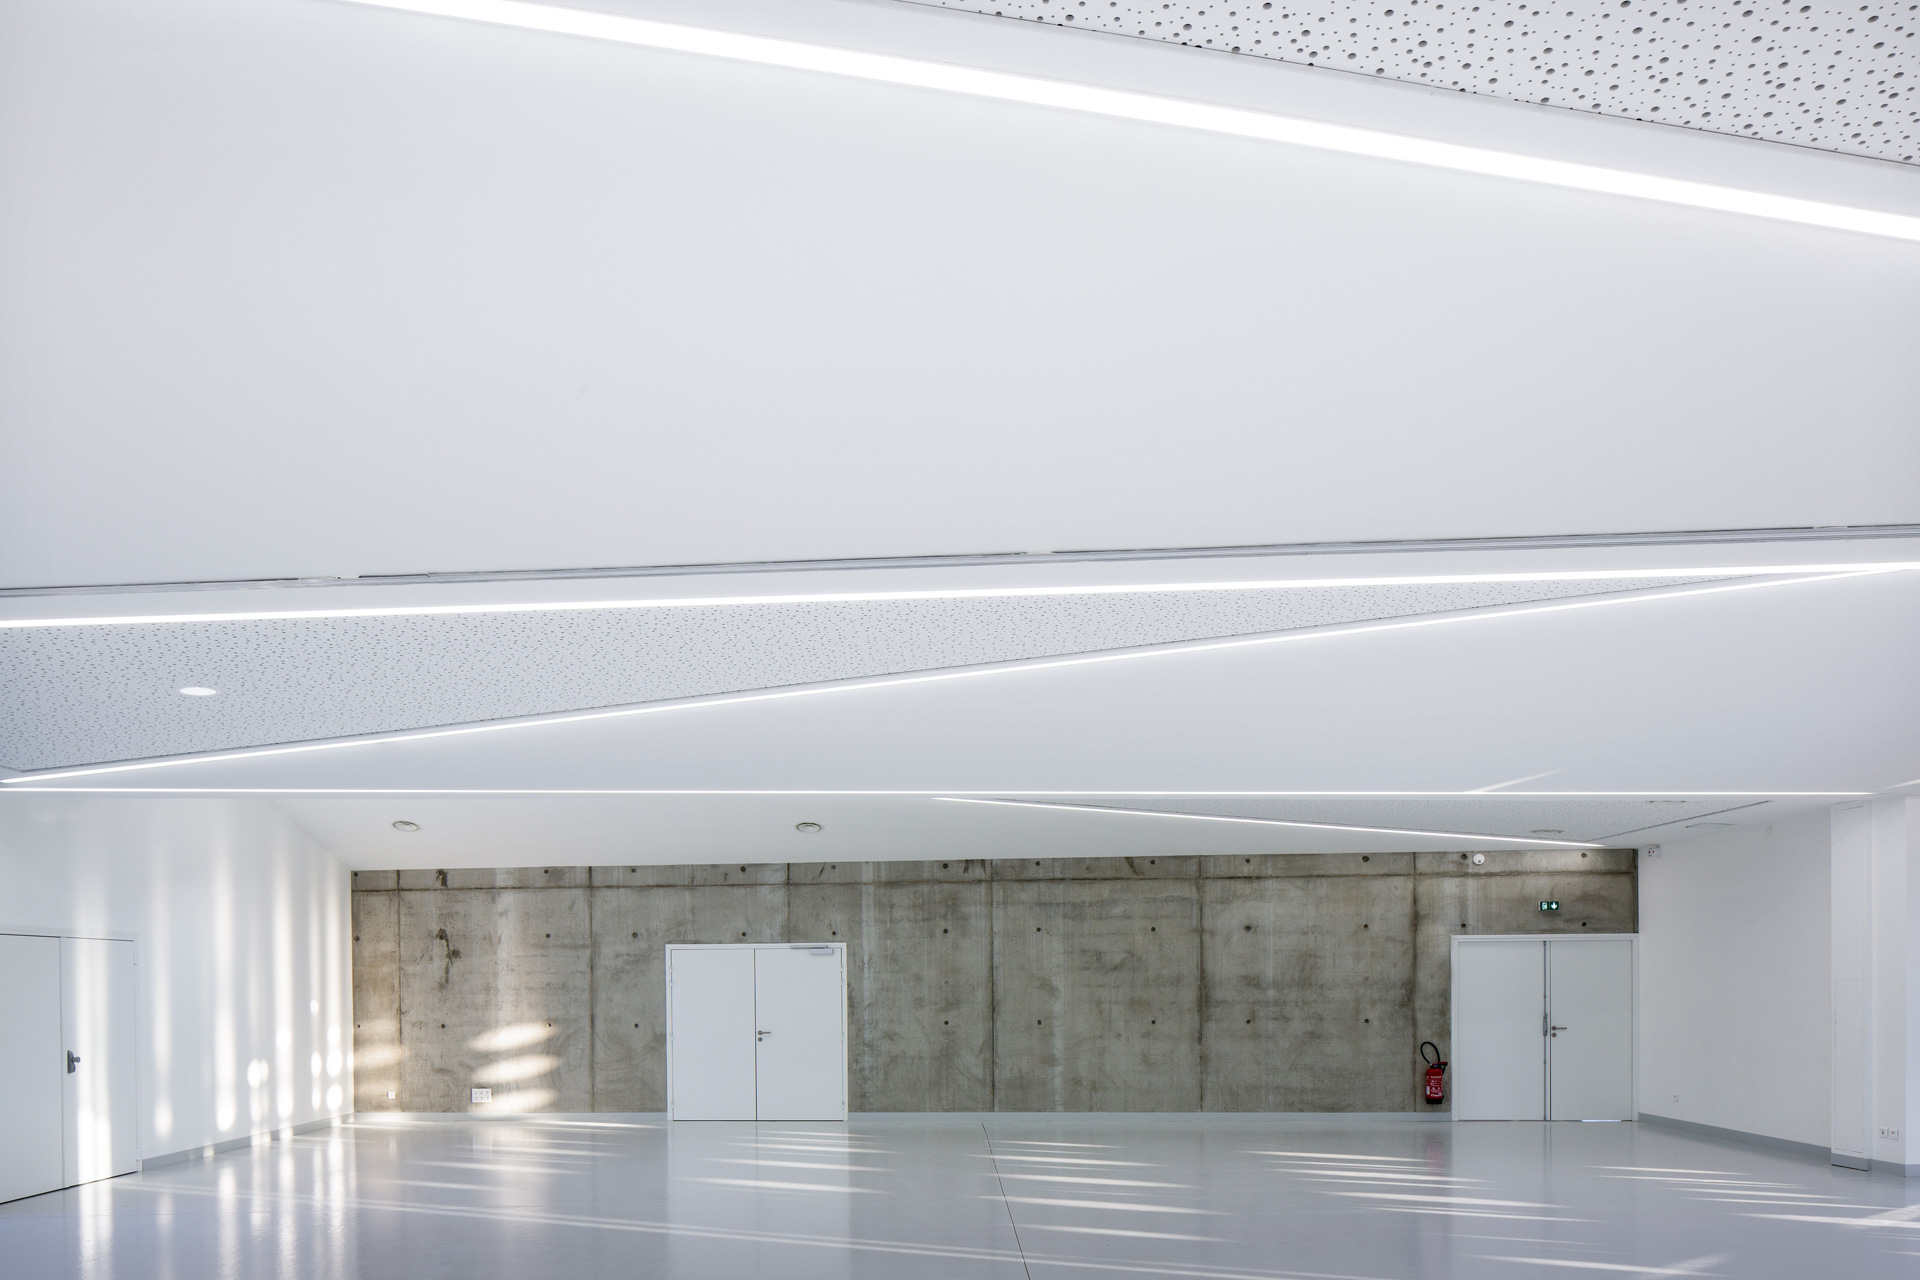 Salle Festive Succieu / Guillaume Girod Architecture